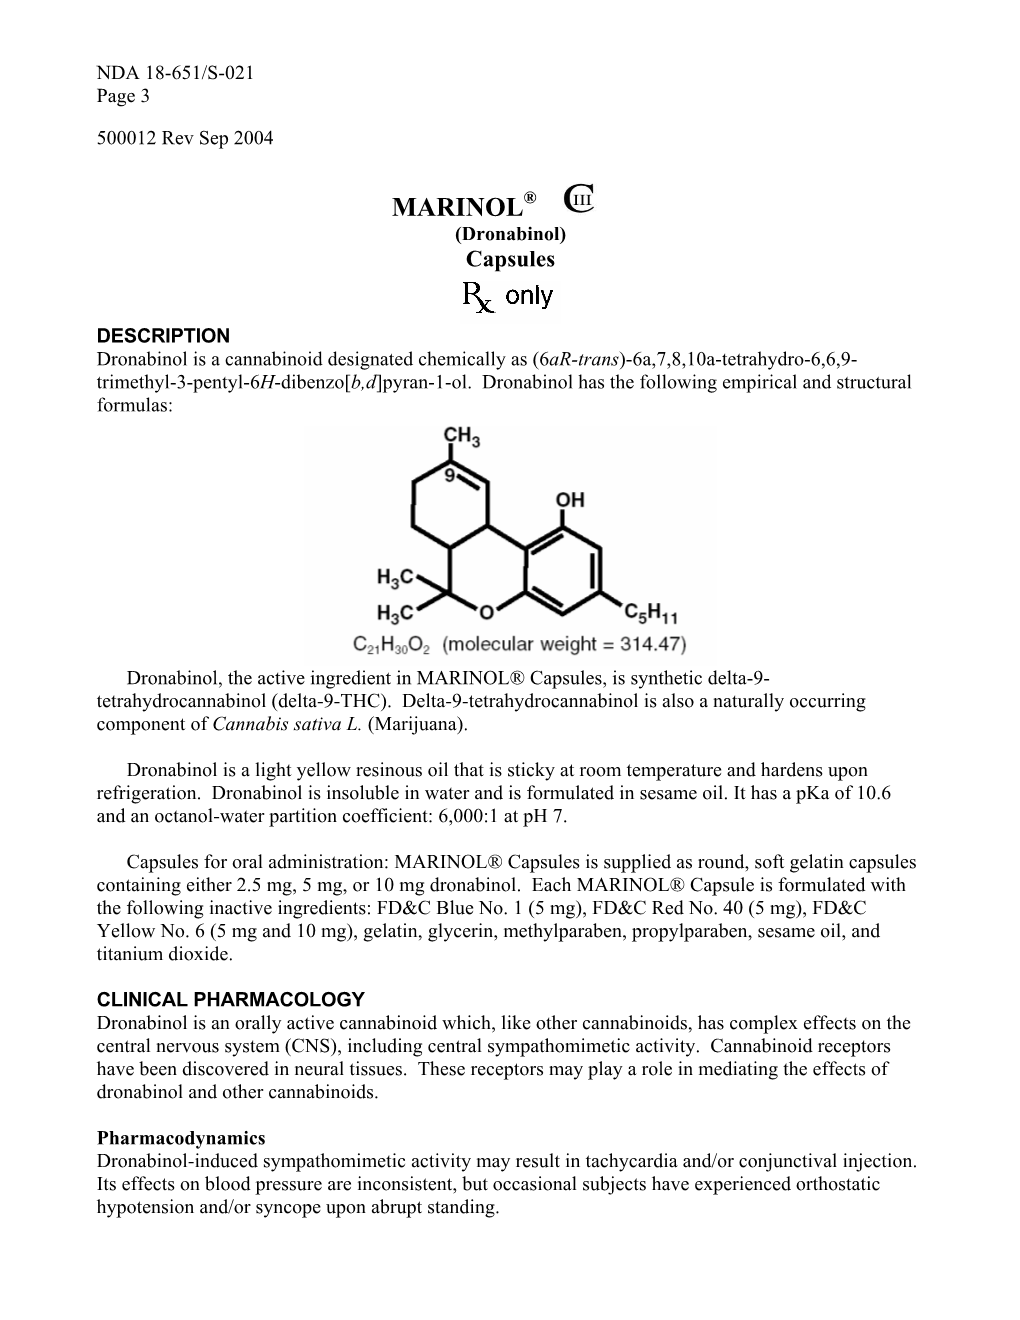 MARINOL® (Dronabinol) Capsules